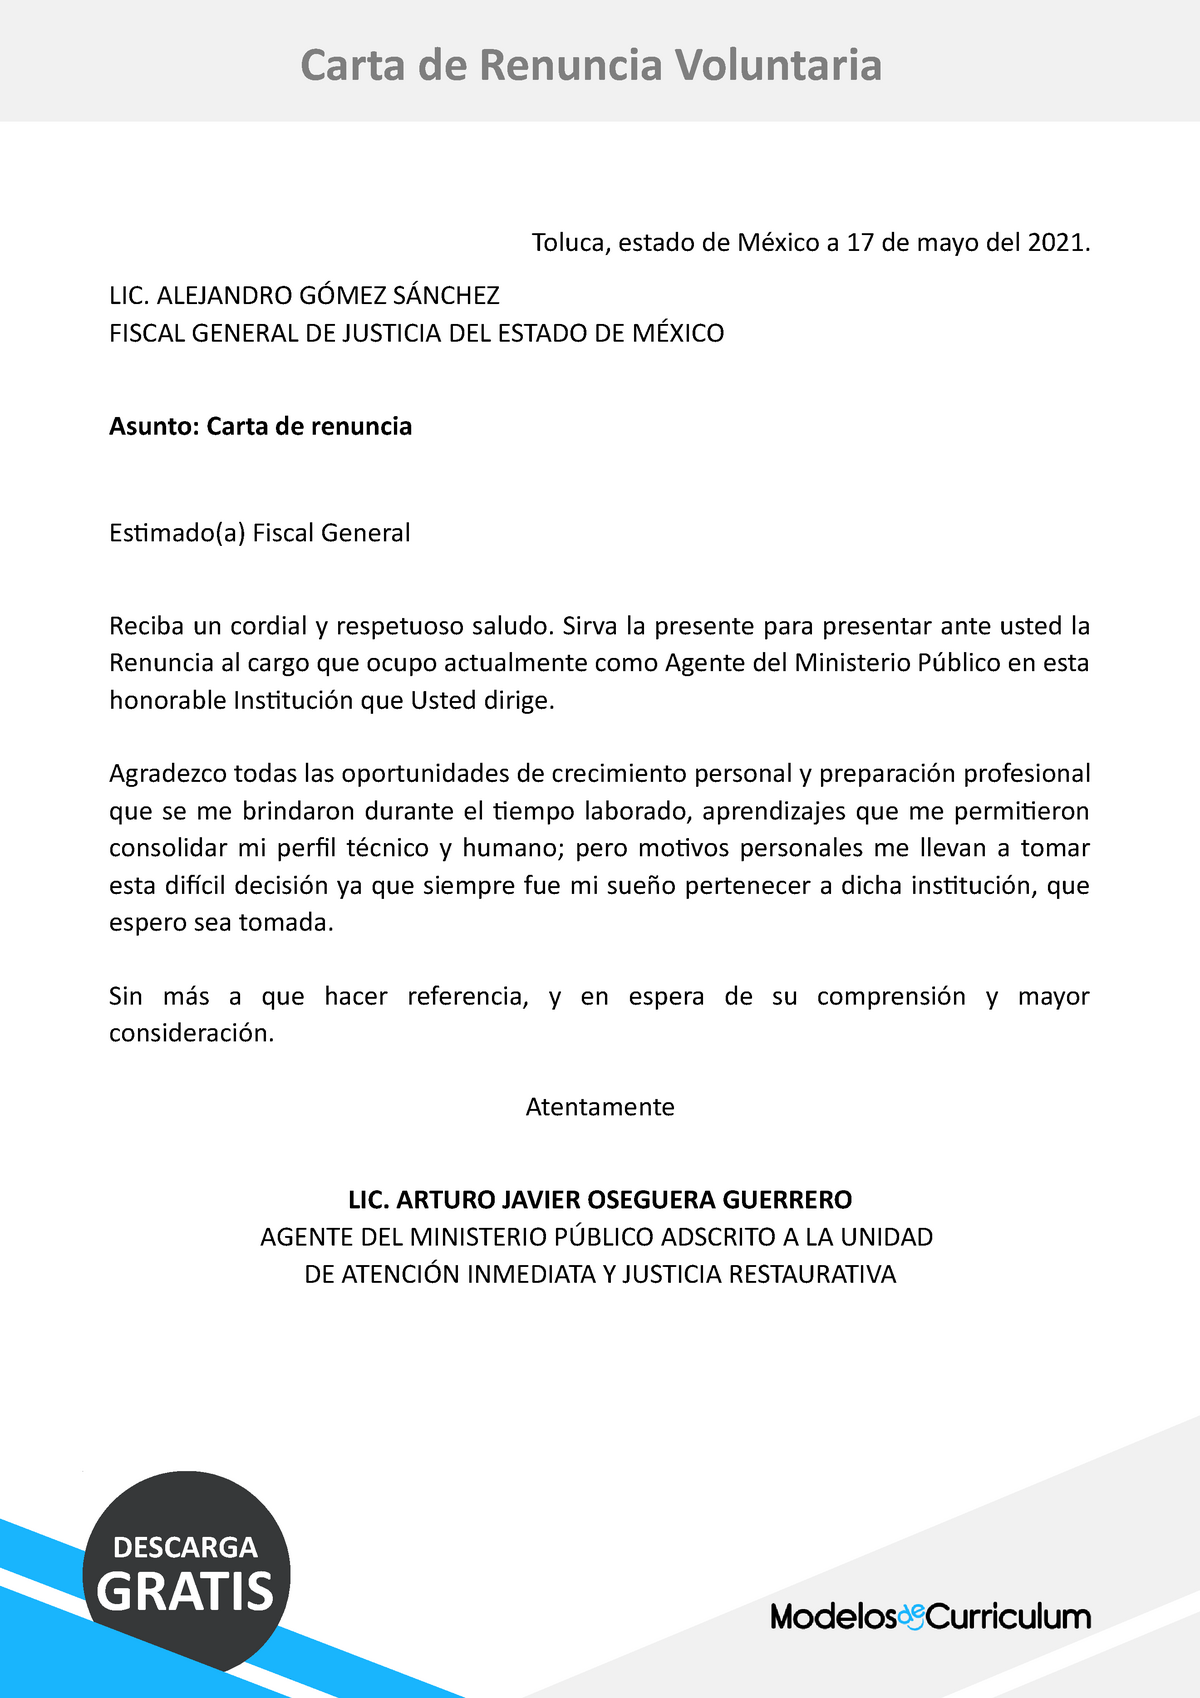 46 modelo de carta de renuncia voluntaria materia laboral - Toluca, estado  de México a 17 de mayo - Studocu